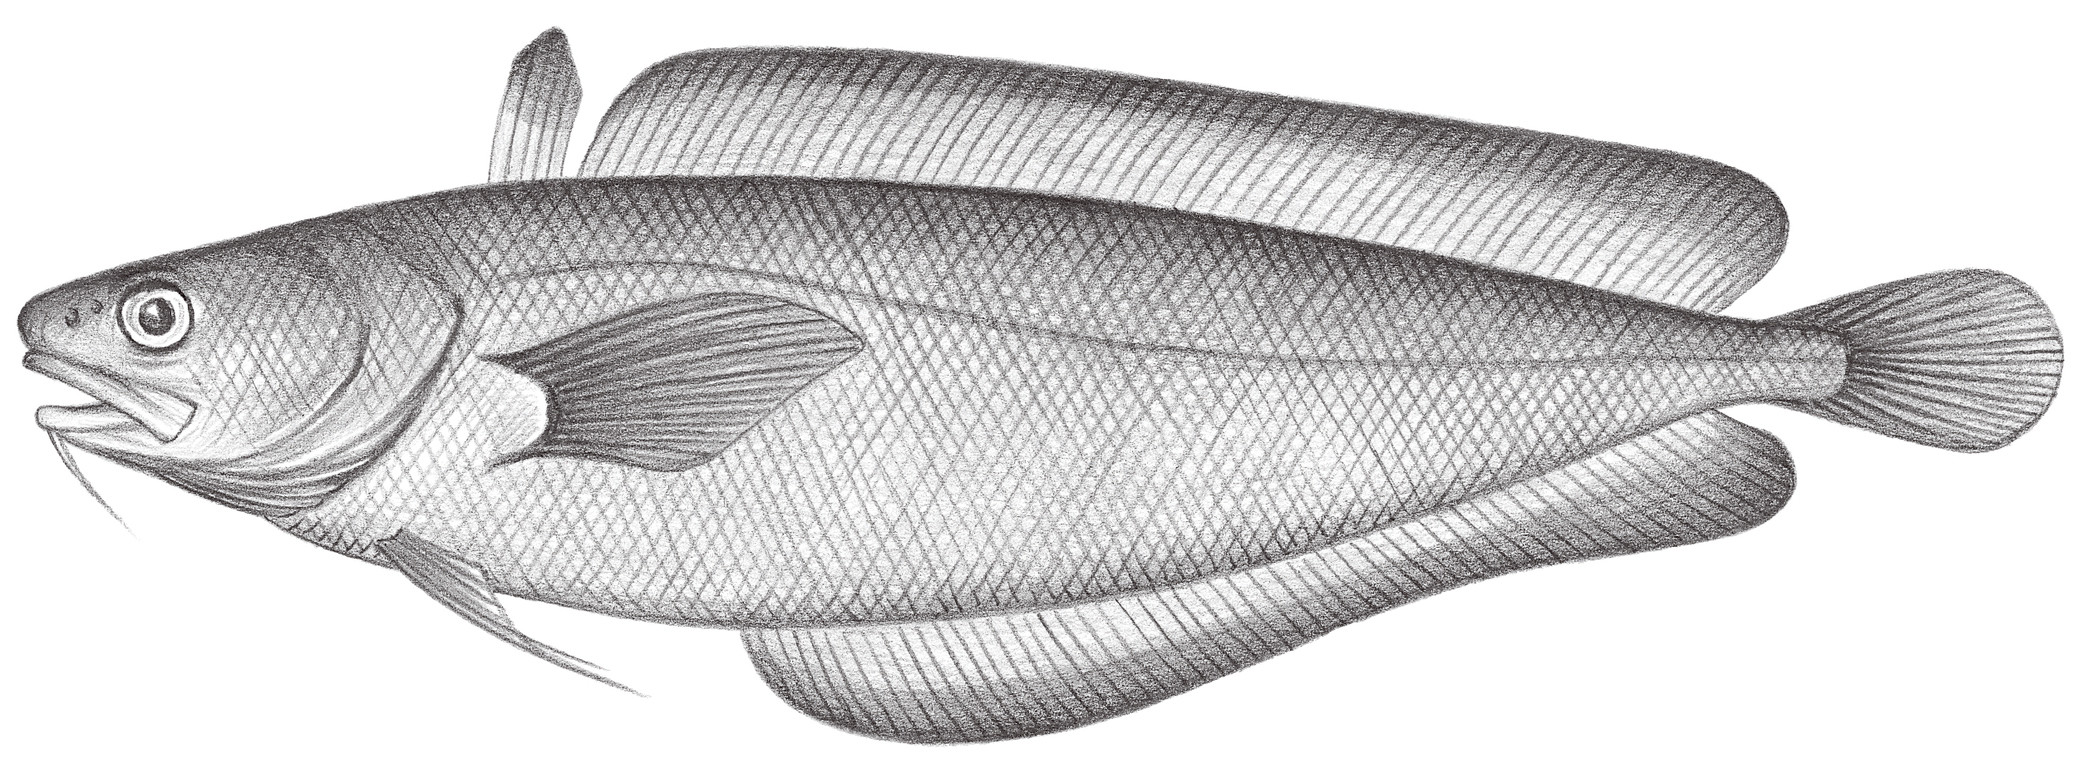 605.	羅鱈 Lotella phycis (Temminck & Schlegel, 1846)